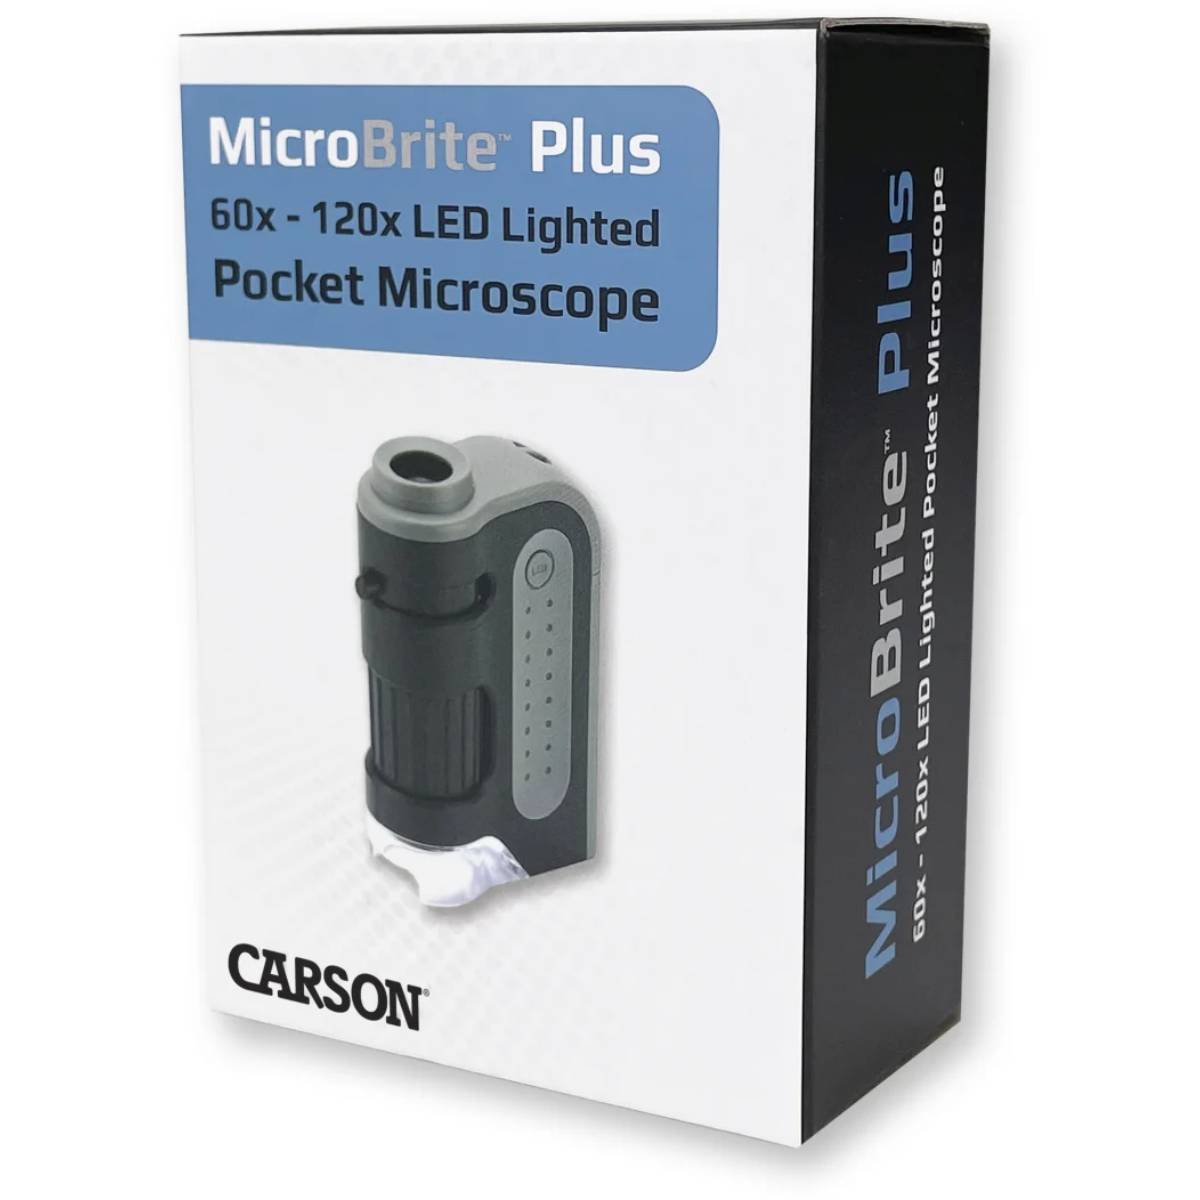 Microscop de buzunar cu LED, Carson, marire 60-120x, MicroBrite